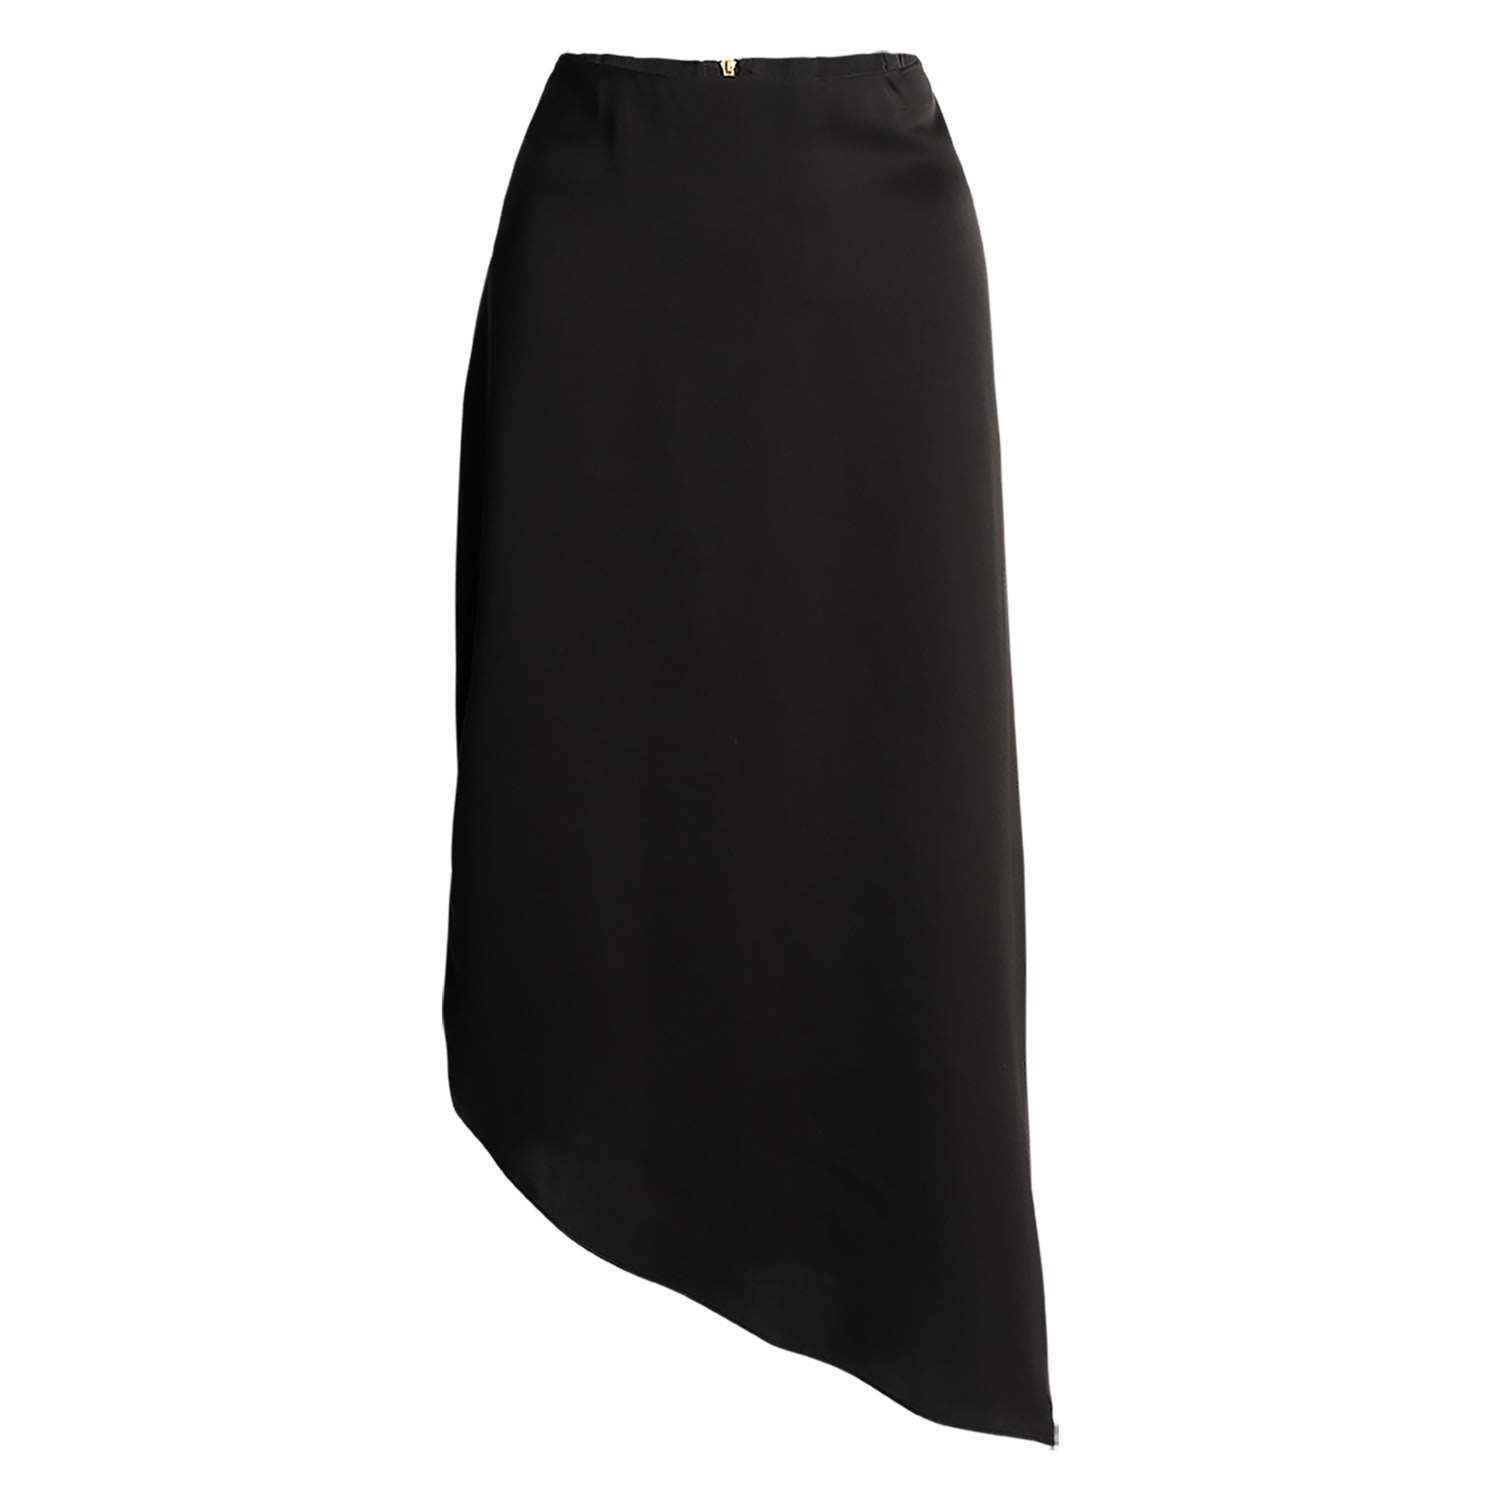 Alanakayart Women's Asymmetrical Skirt - Black